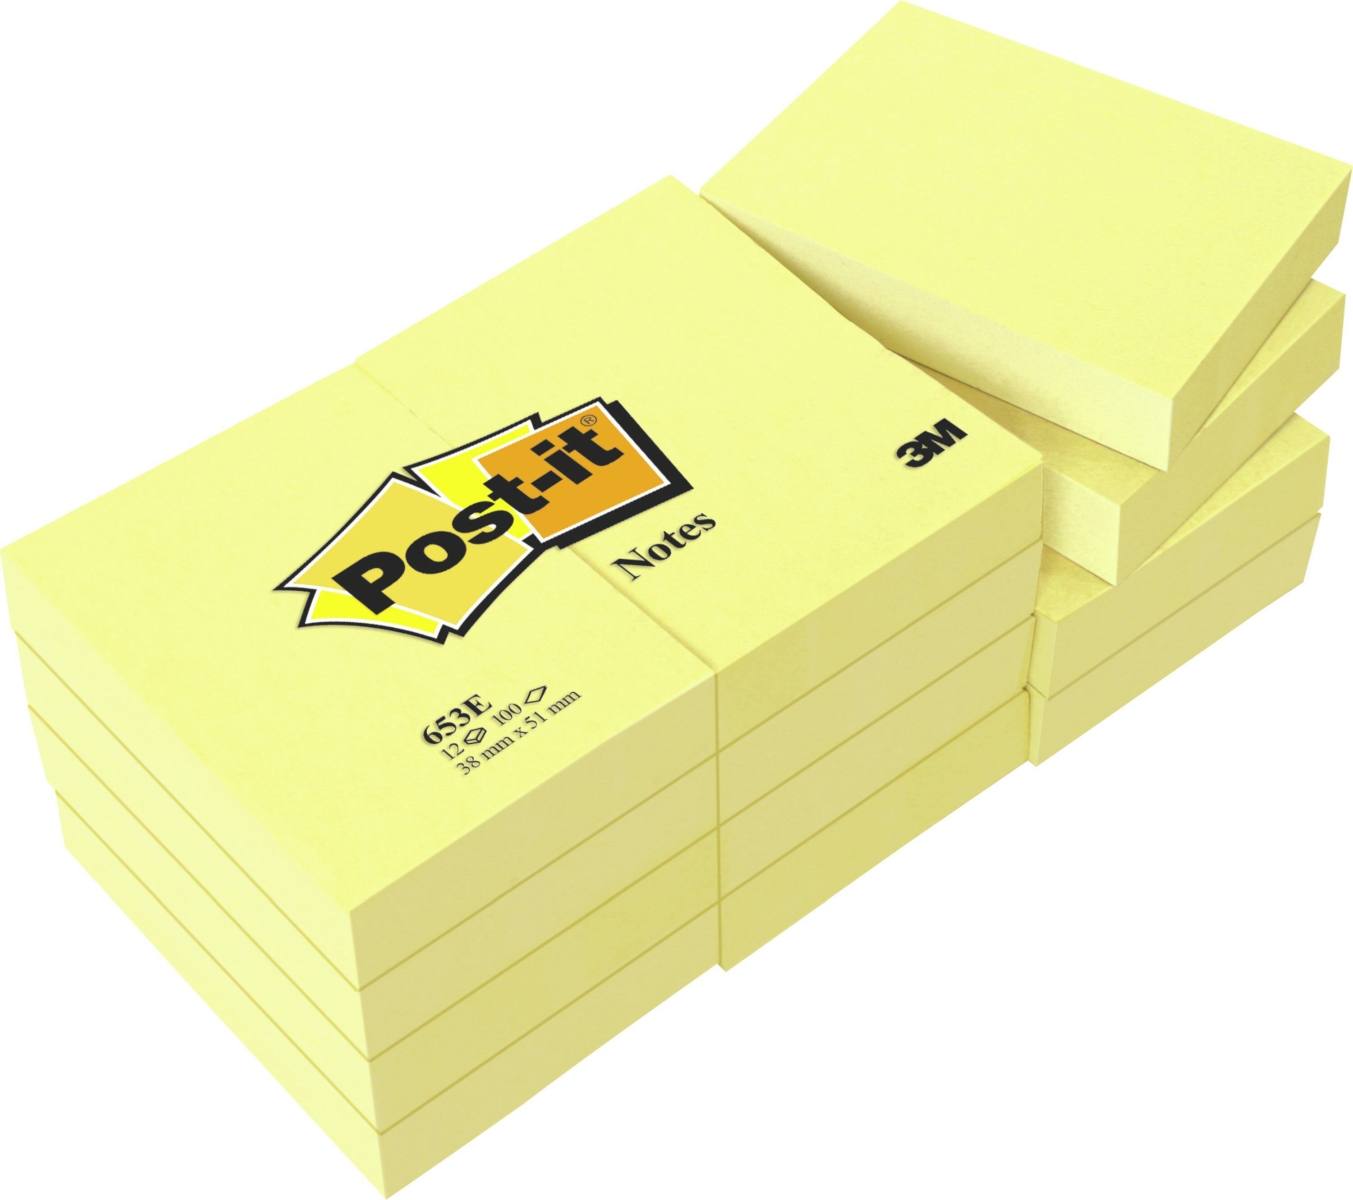 3M Post-it Notas 653E, 51 mm x 38 mm, amarillo, 12 blocs de 100 hojas cada uno